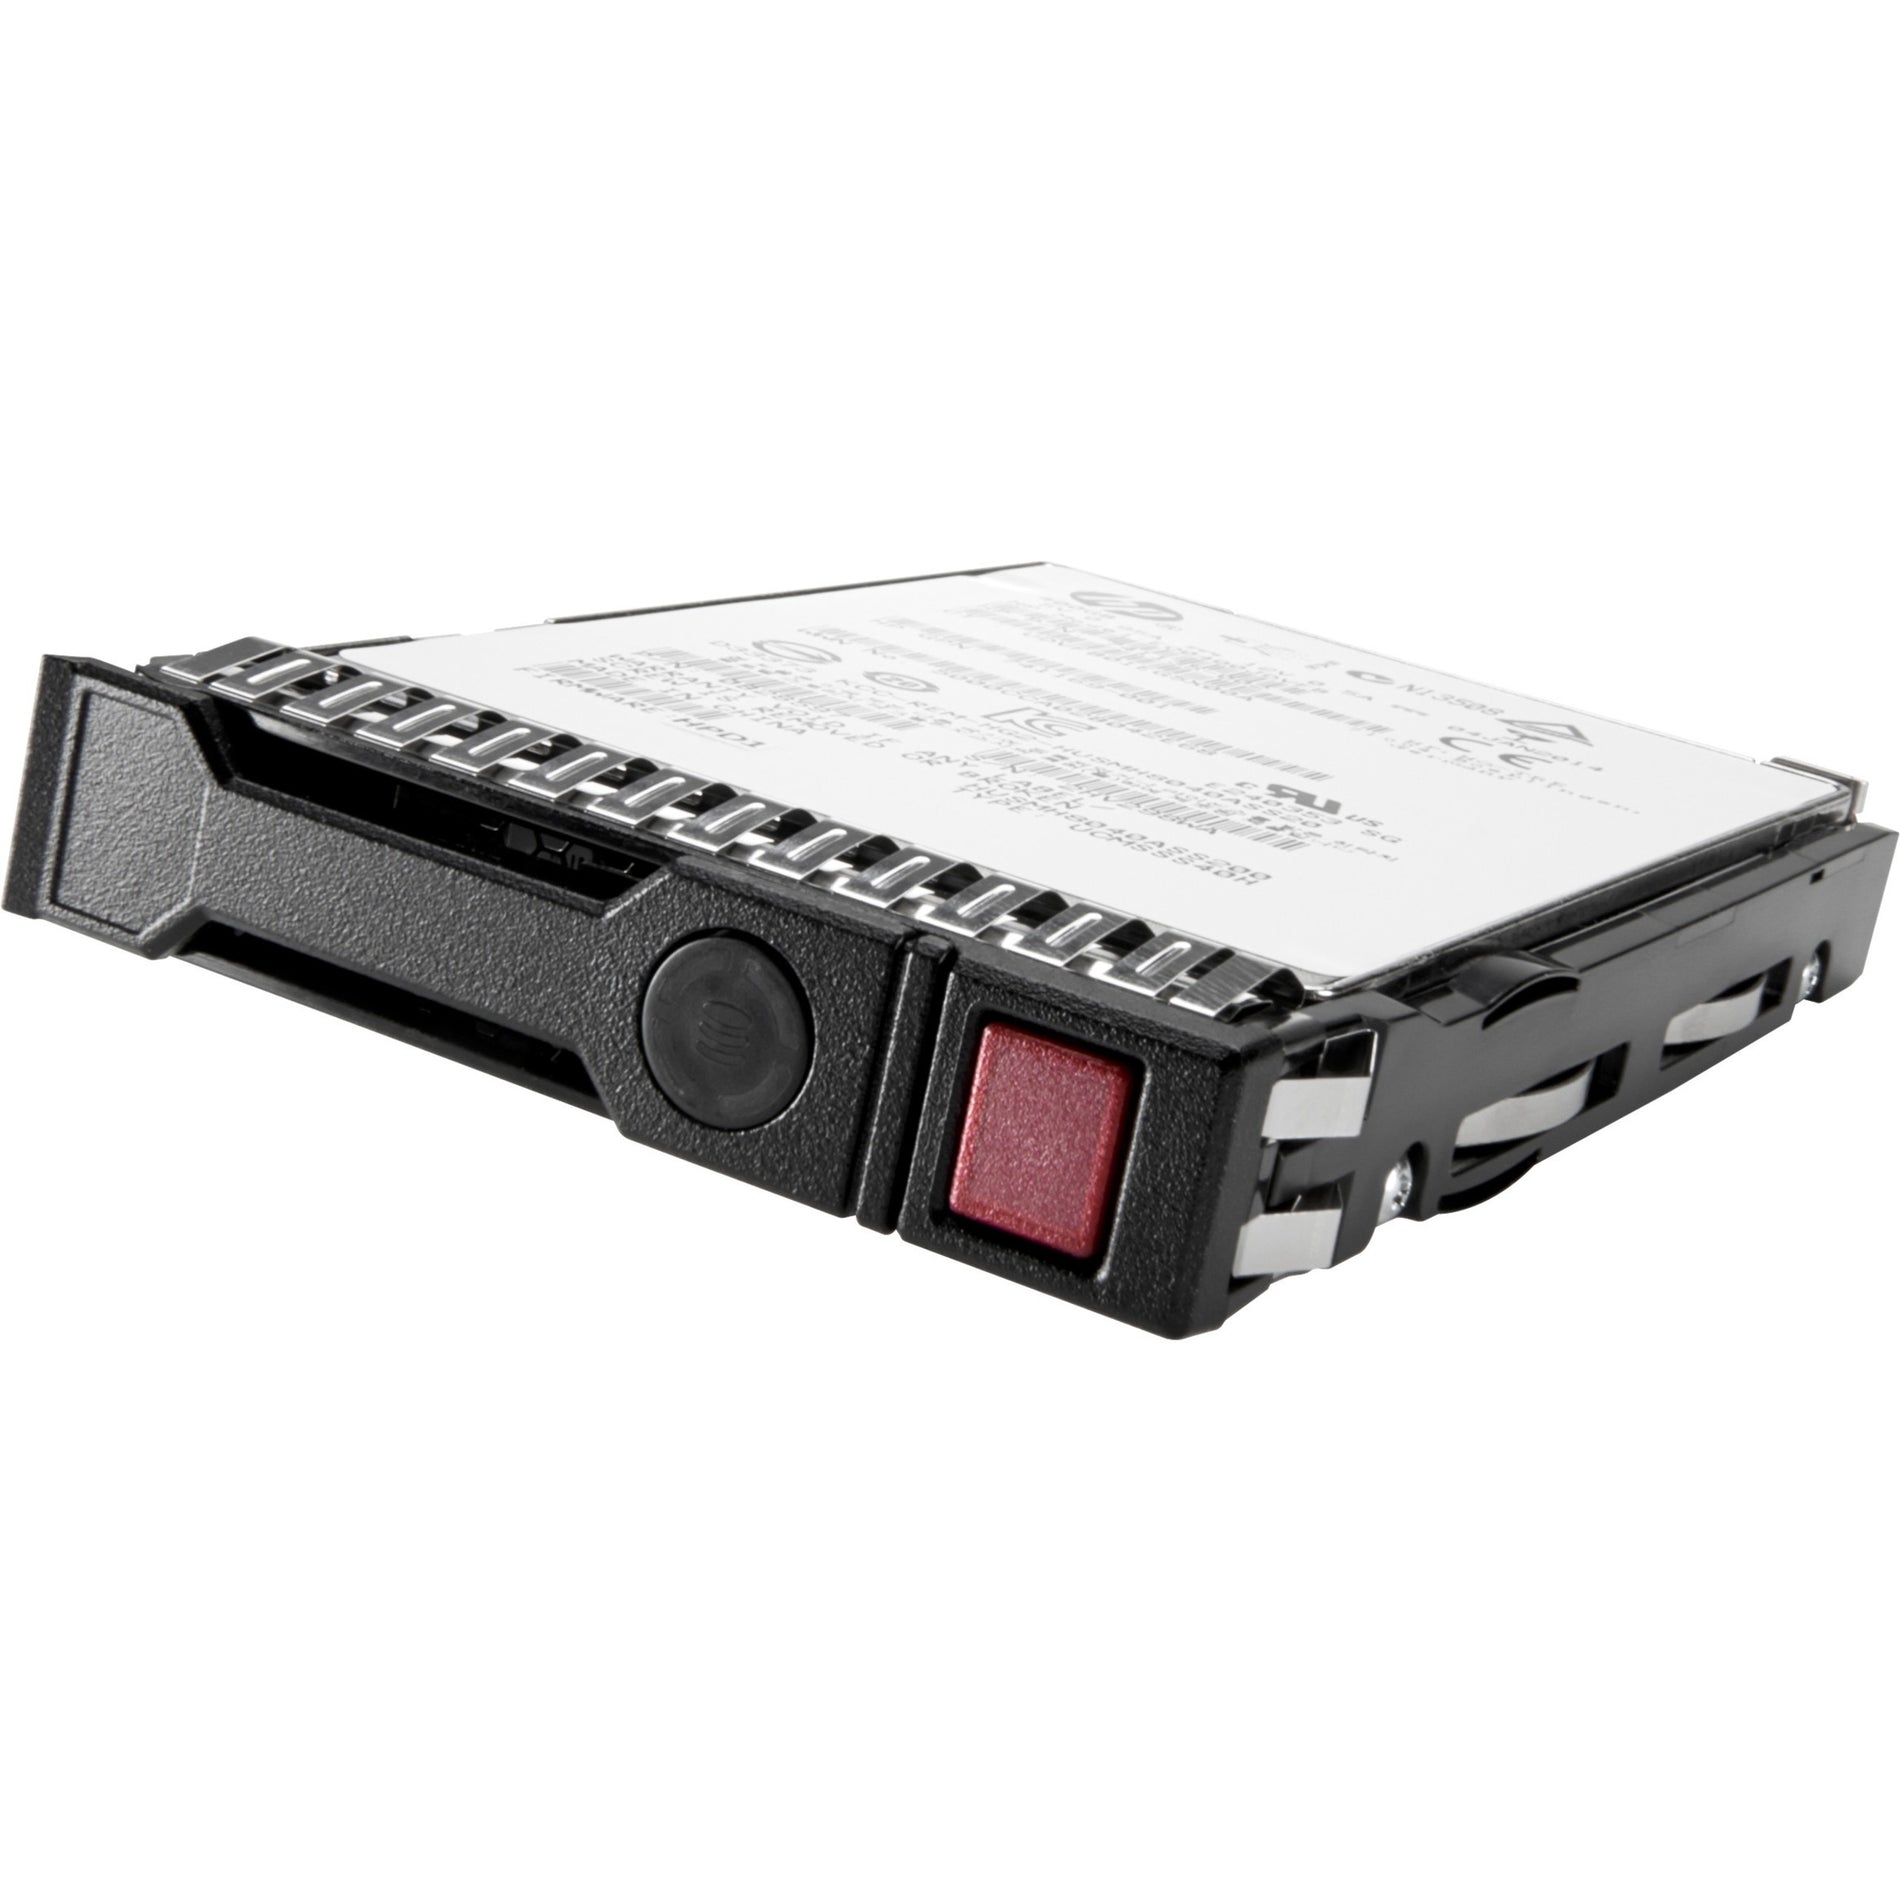 HPE N9X96A Solid State Drive - 800 GB, 2.5" Internal, SAS (12Gb/s SAS)